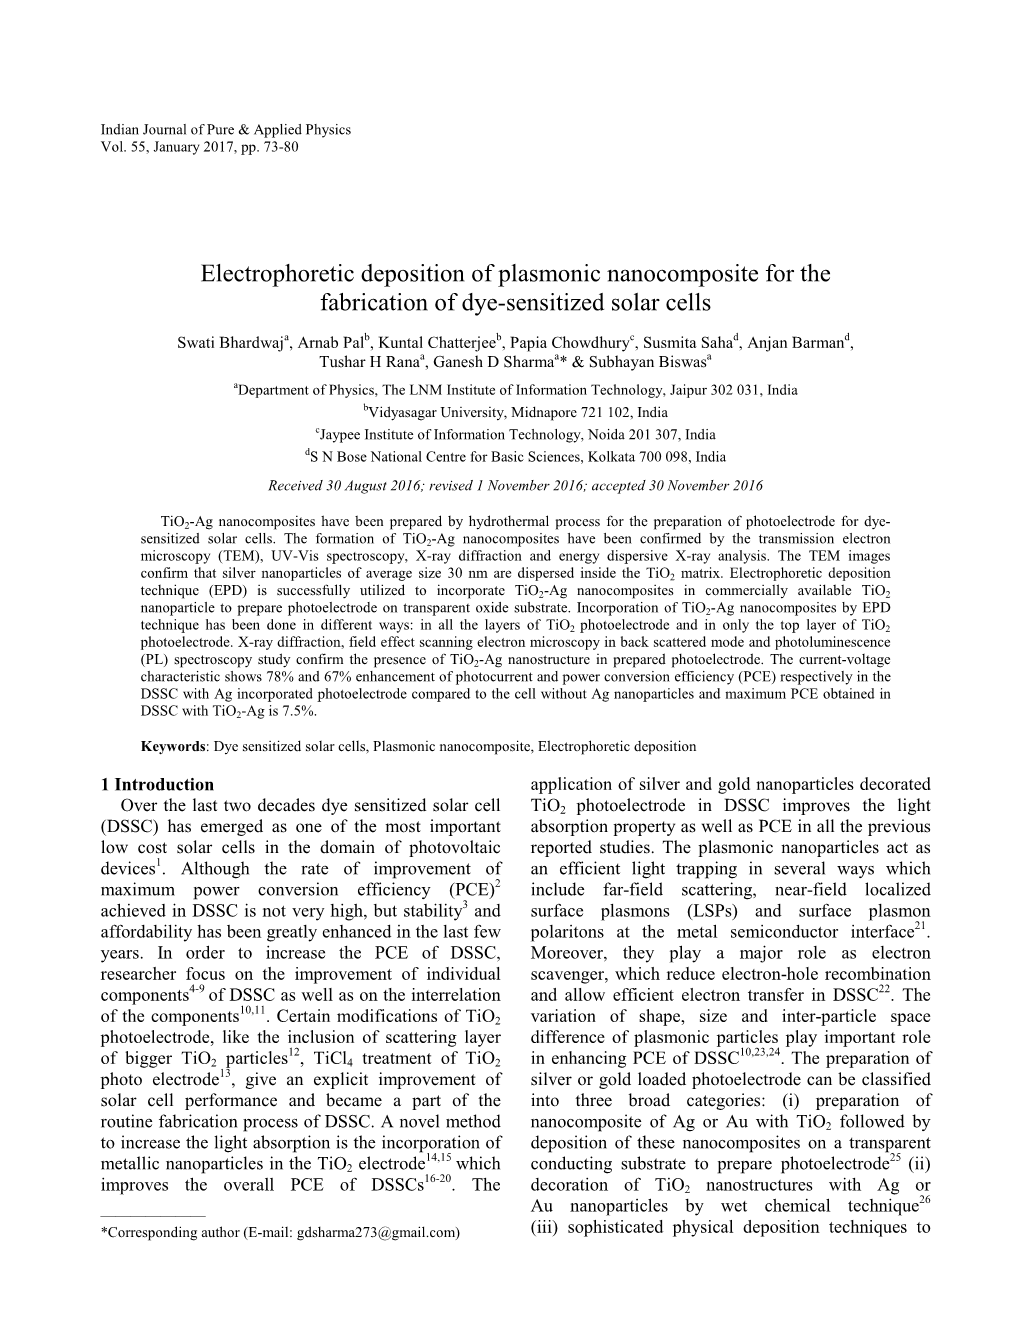 Electrophoretic Deposition of Plasmonic Nanocomposite for the Fabrication of Dye-Sensitized Solar Cells